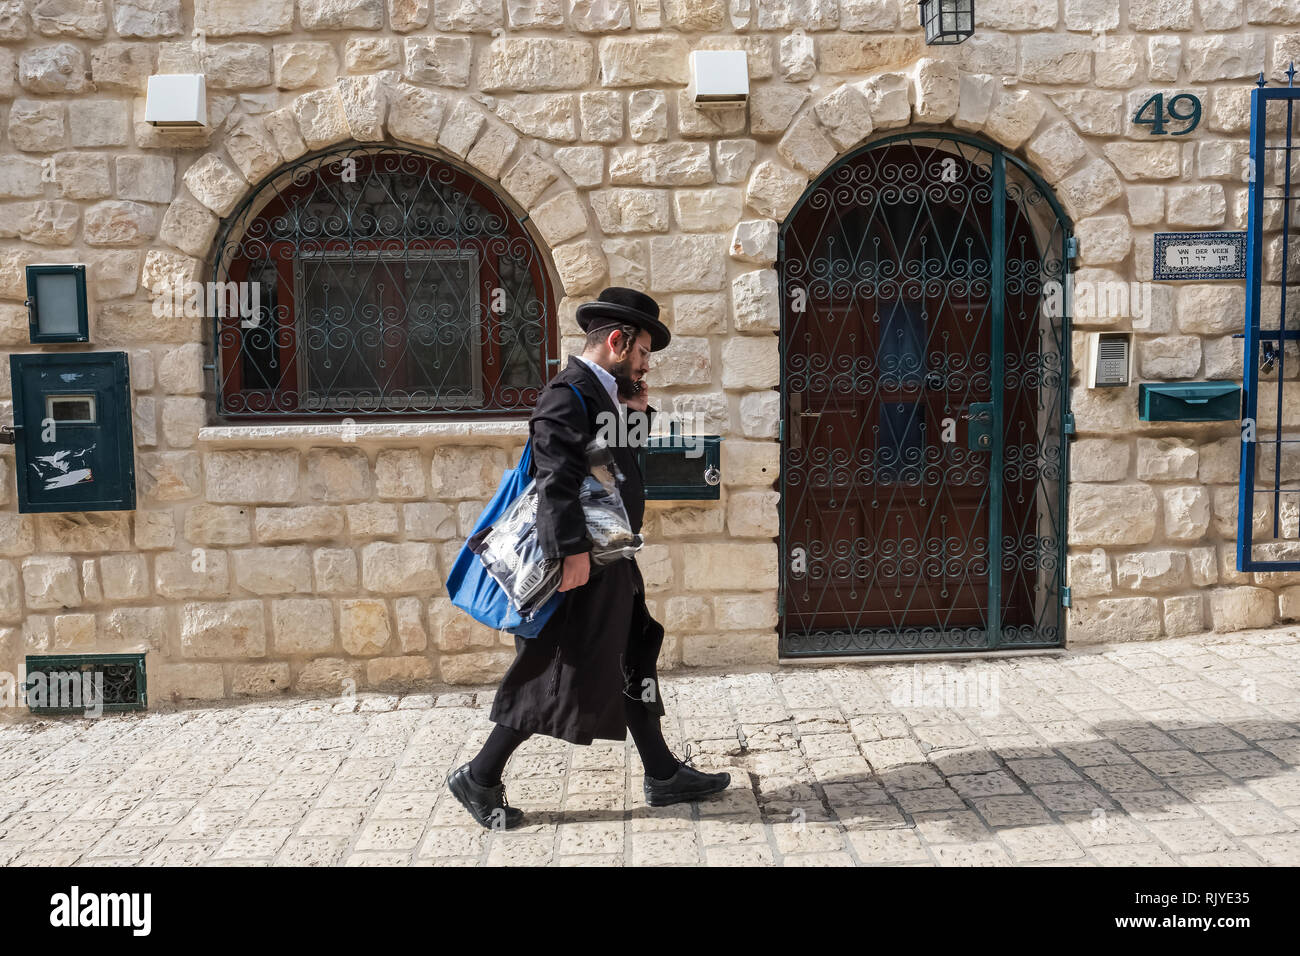 Tzfat, Israel - November 18, 2018: Orthodox jewish man walking on the street of Safed city. Tzfat has a reputation as the city of Kabbalah. Stock Photo